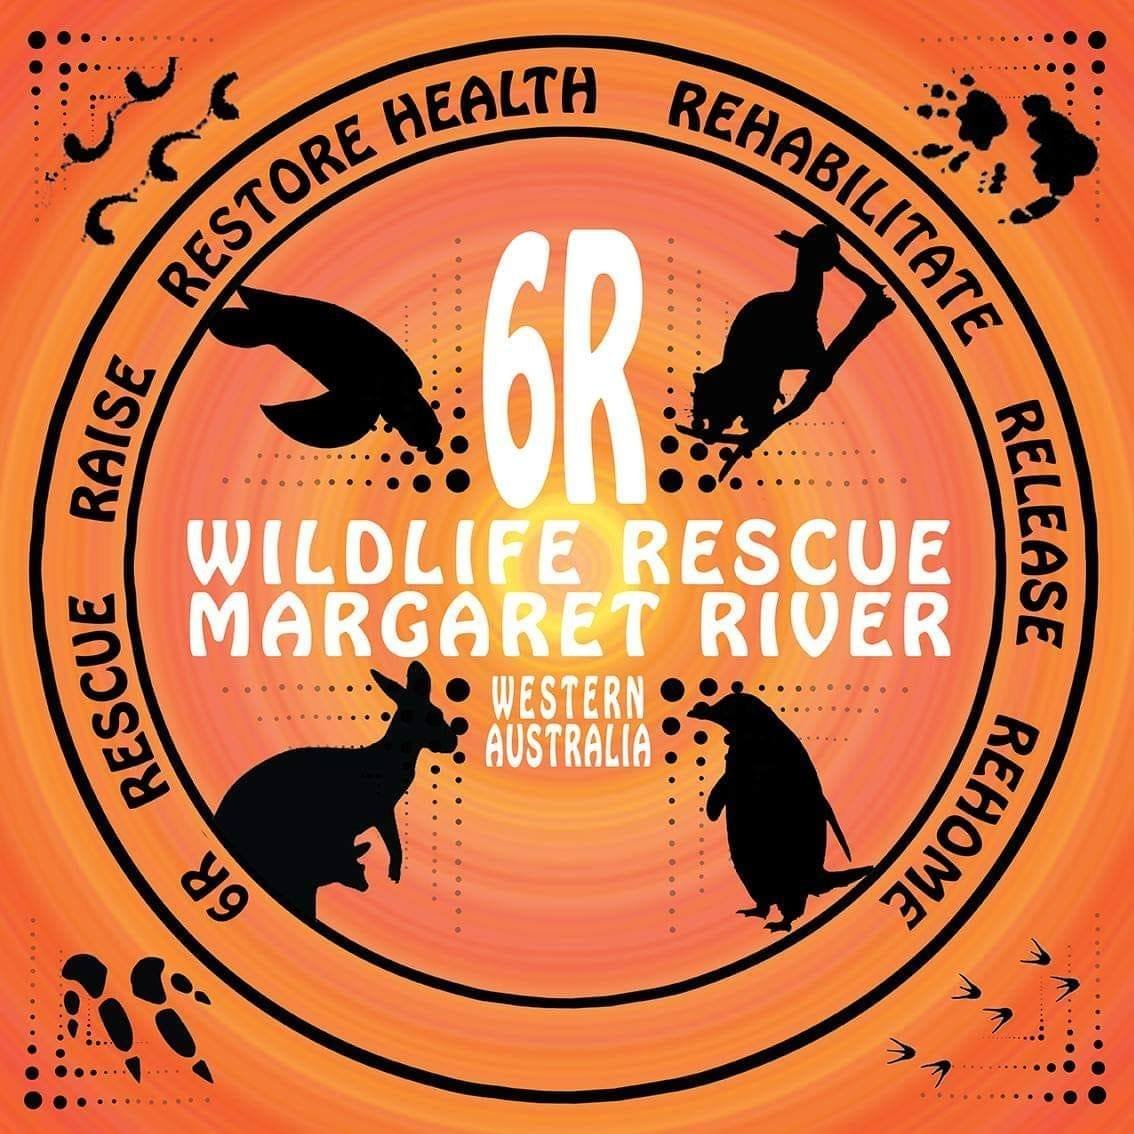 6r reptile rescue logo.jpeg